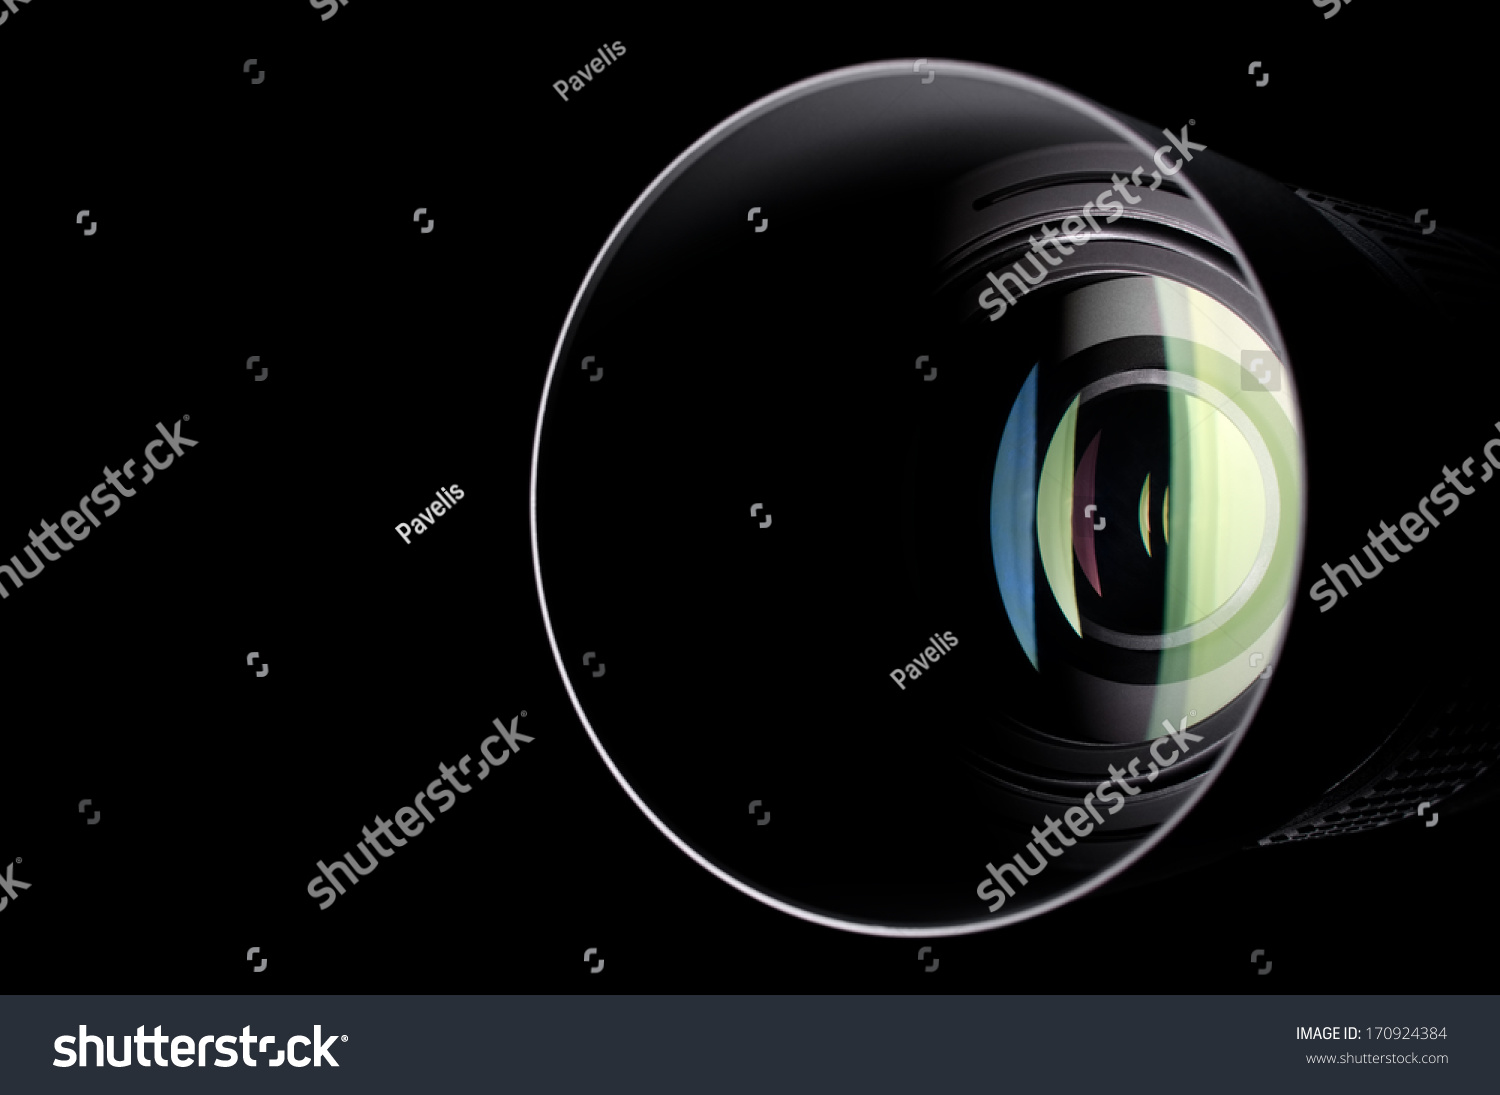 Close-up photo of camera zoom lens #170924384